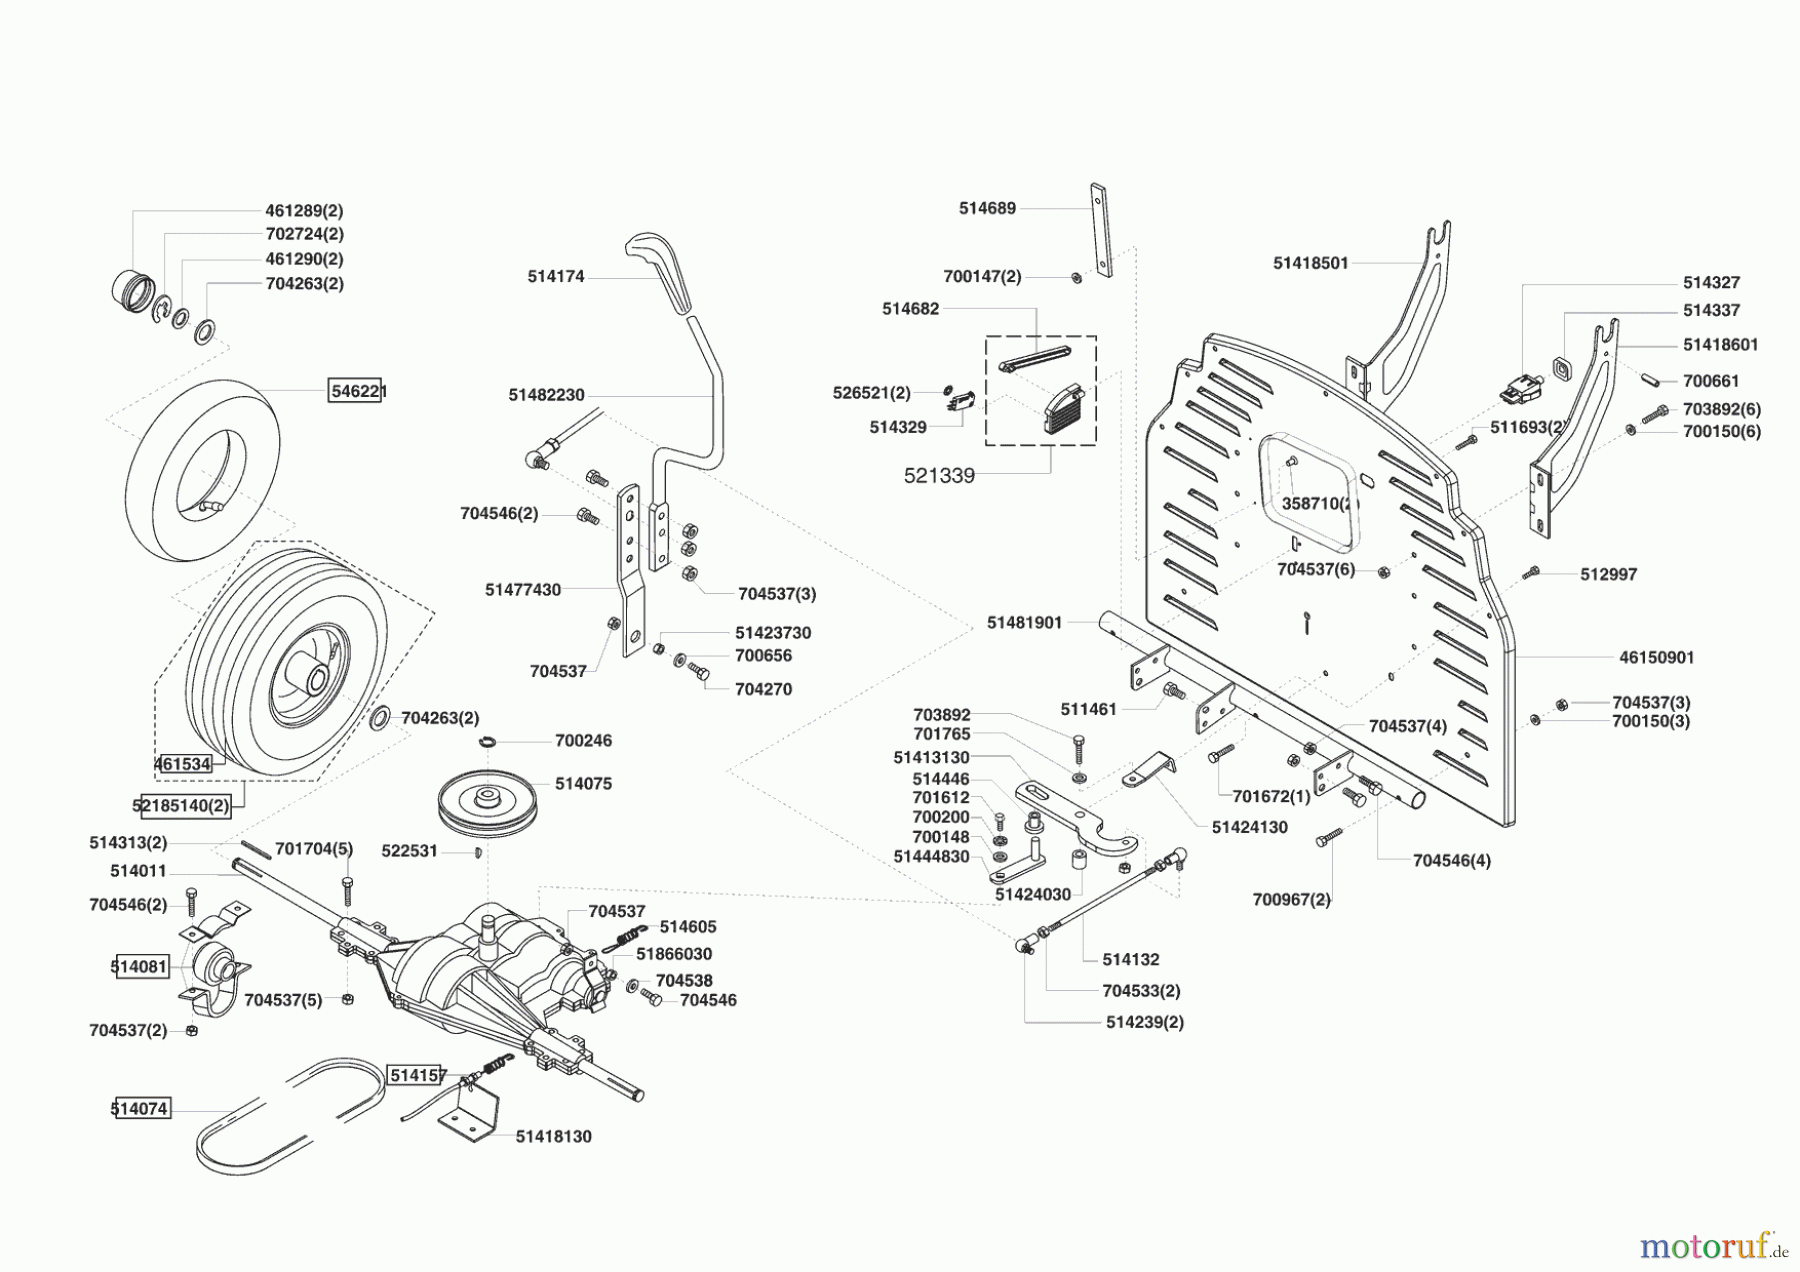  AL-KO Gartentechnik Rasentraktor T850 Seite 3